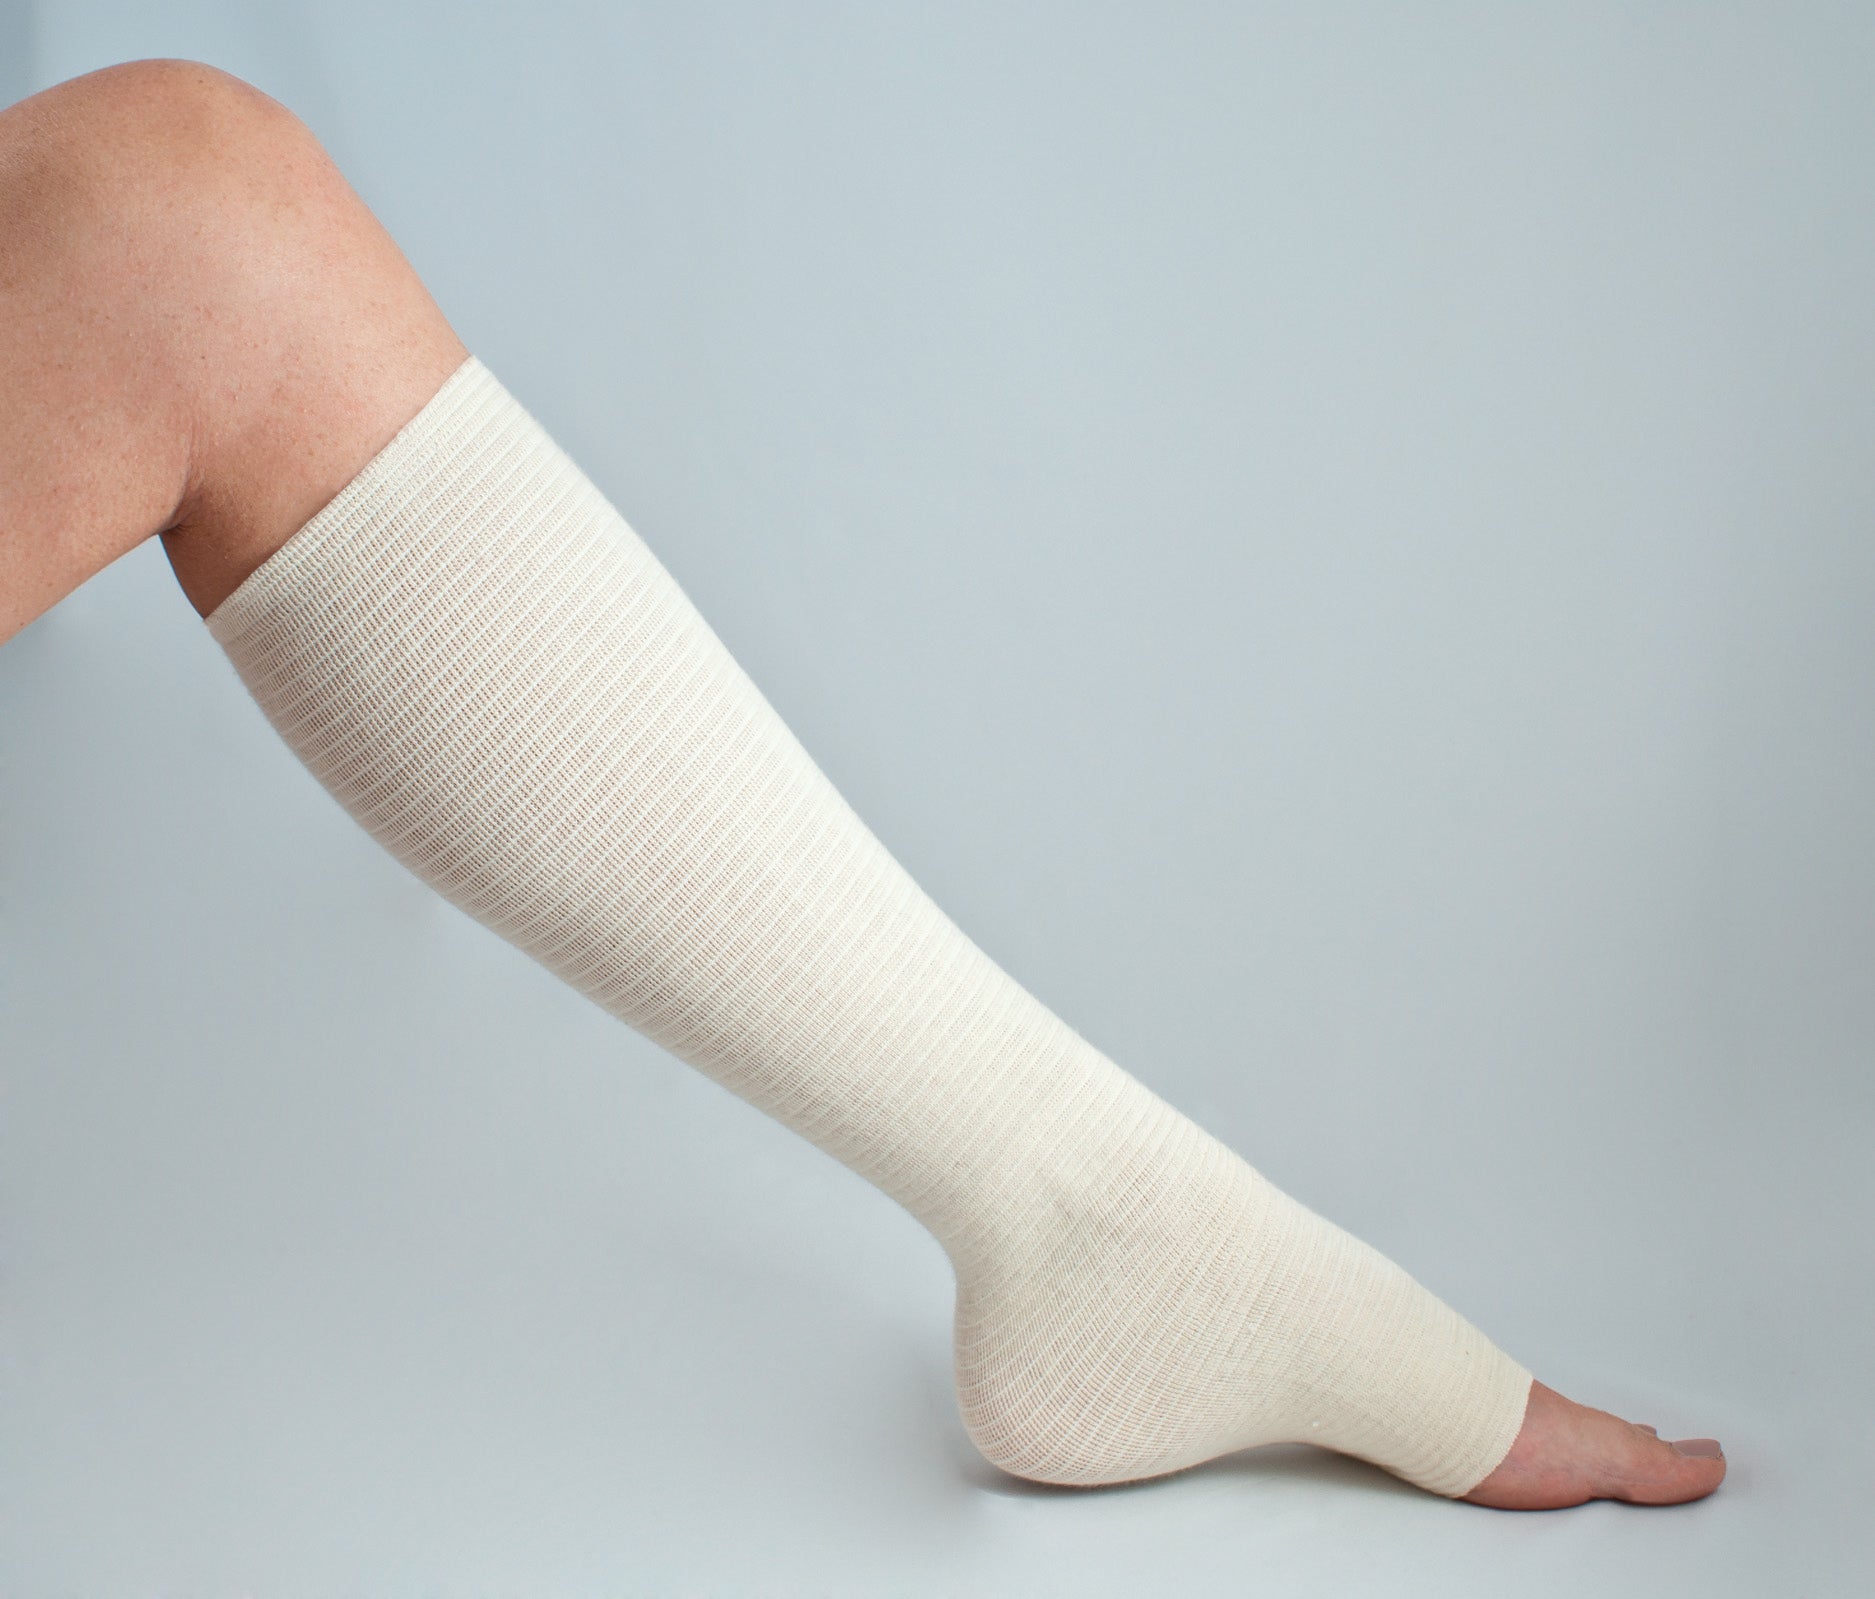 EA/1 - Lohamann & Rauscher tg&reg; Shape Tubular Bandage Medium, Full Leg, 13-3/4" to 15-1/4" Calf Circumference - Best Buy Medical Supplies